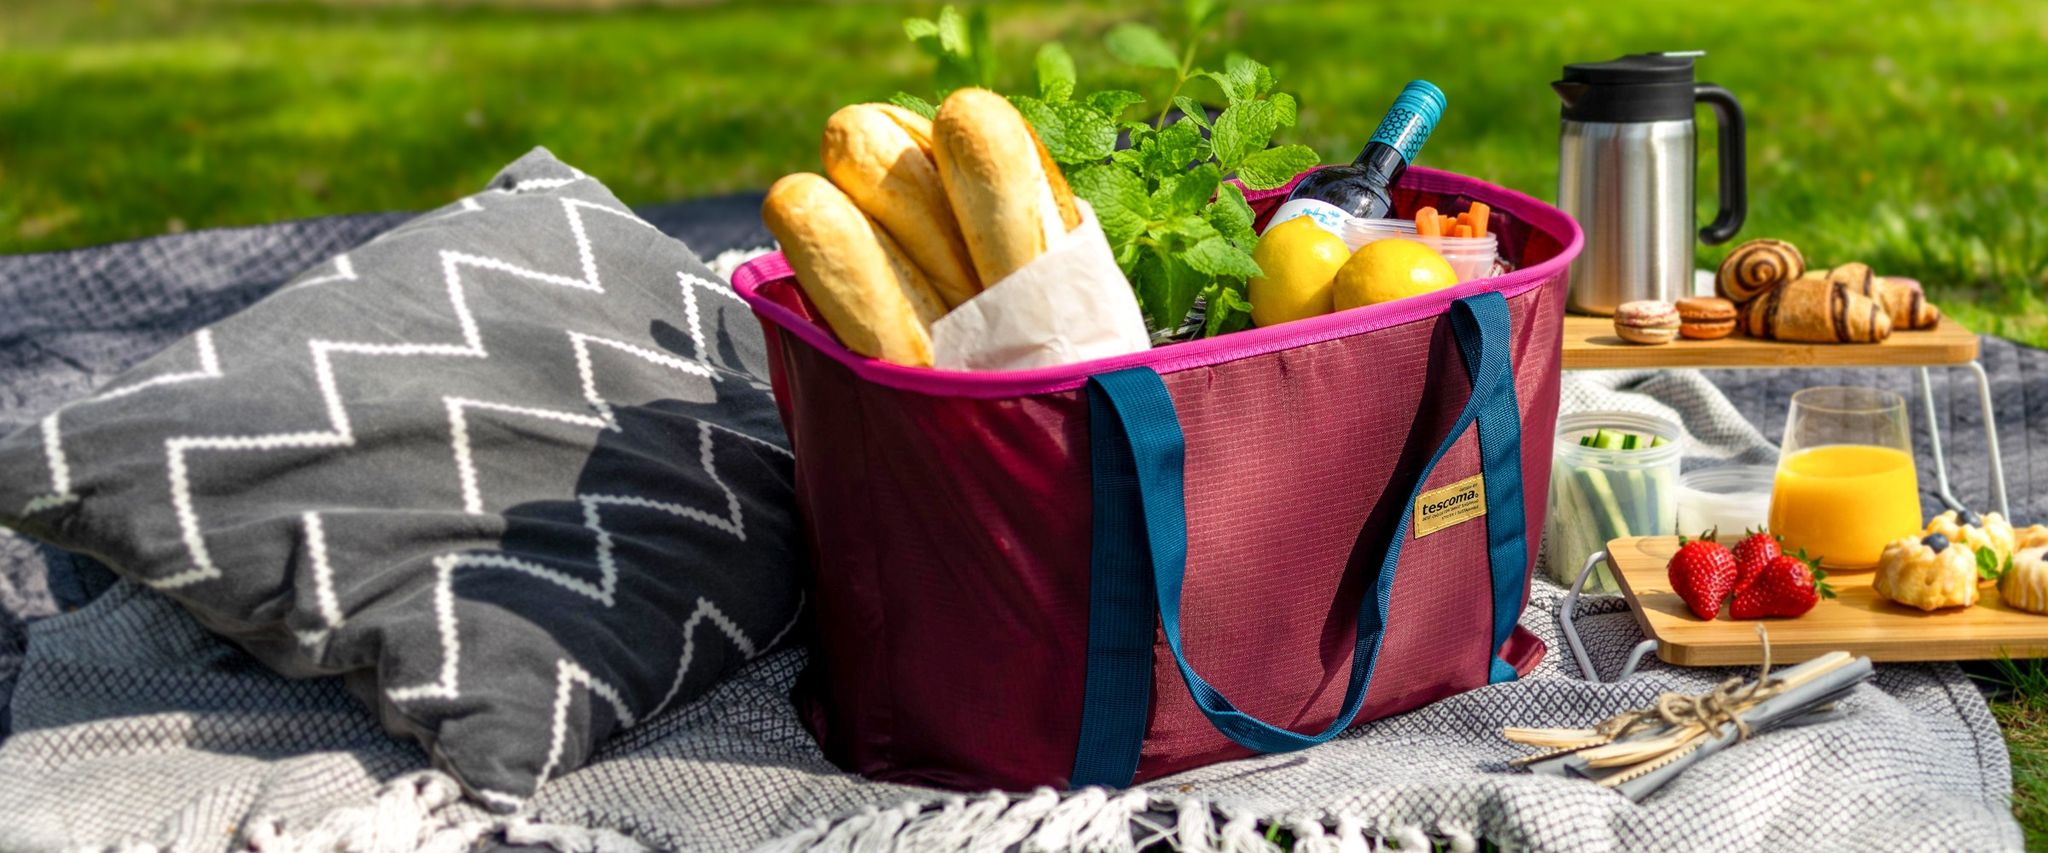 Let's have a picnic!